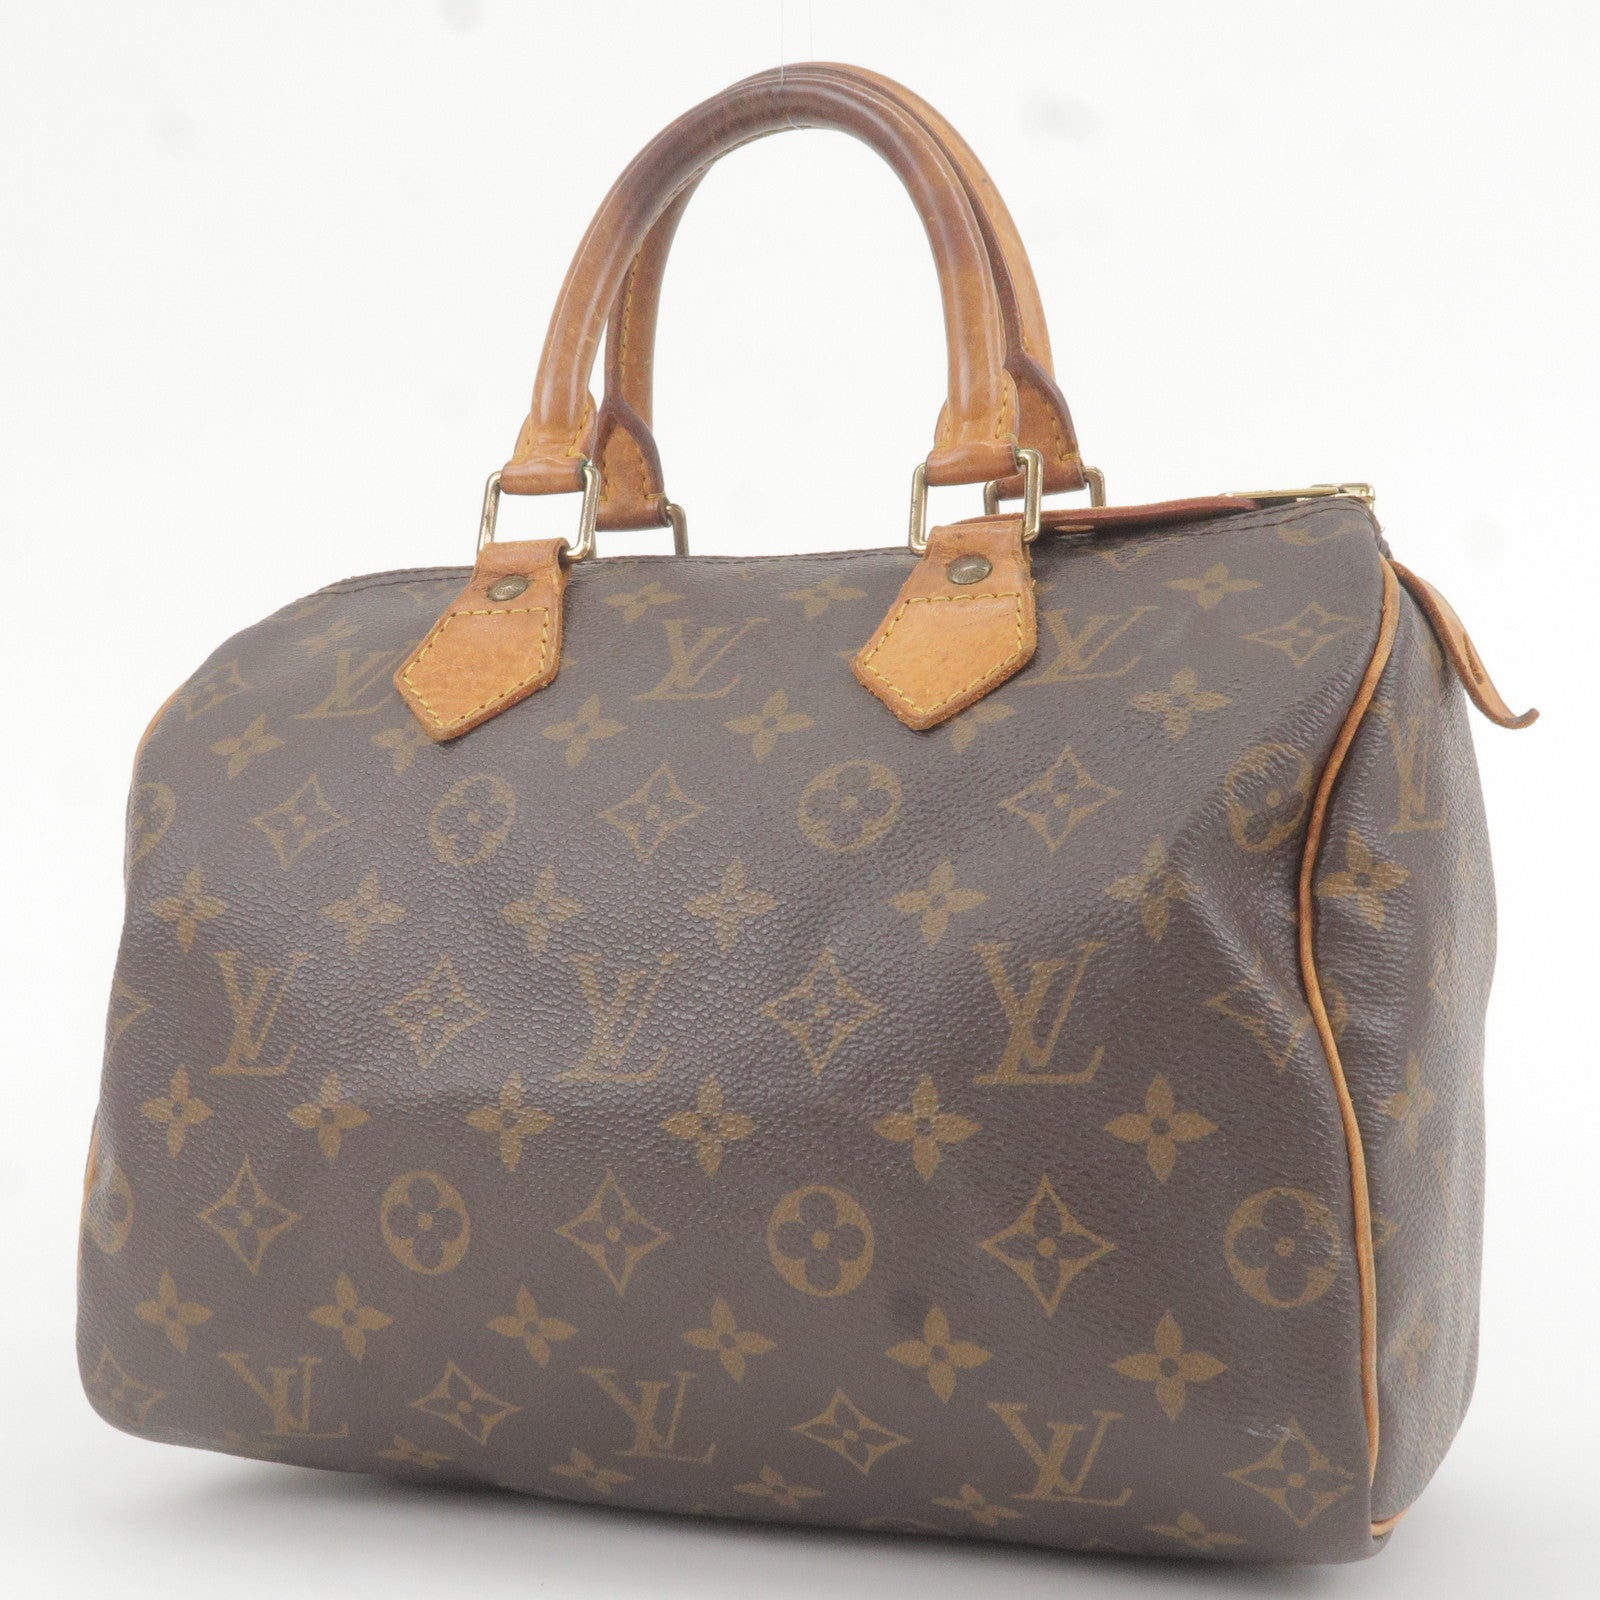 Authentic Louis Vuitton Speedy 25 Monogram M41528 Leather Tag